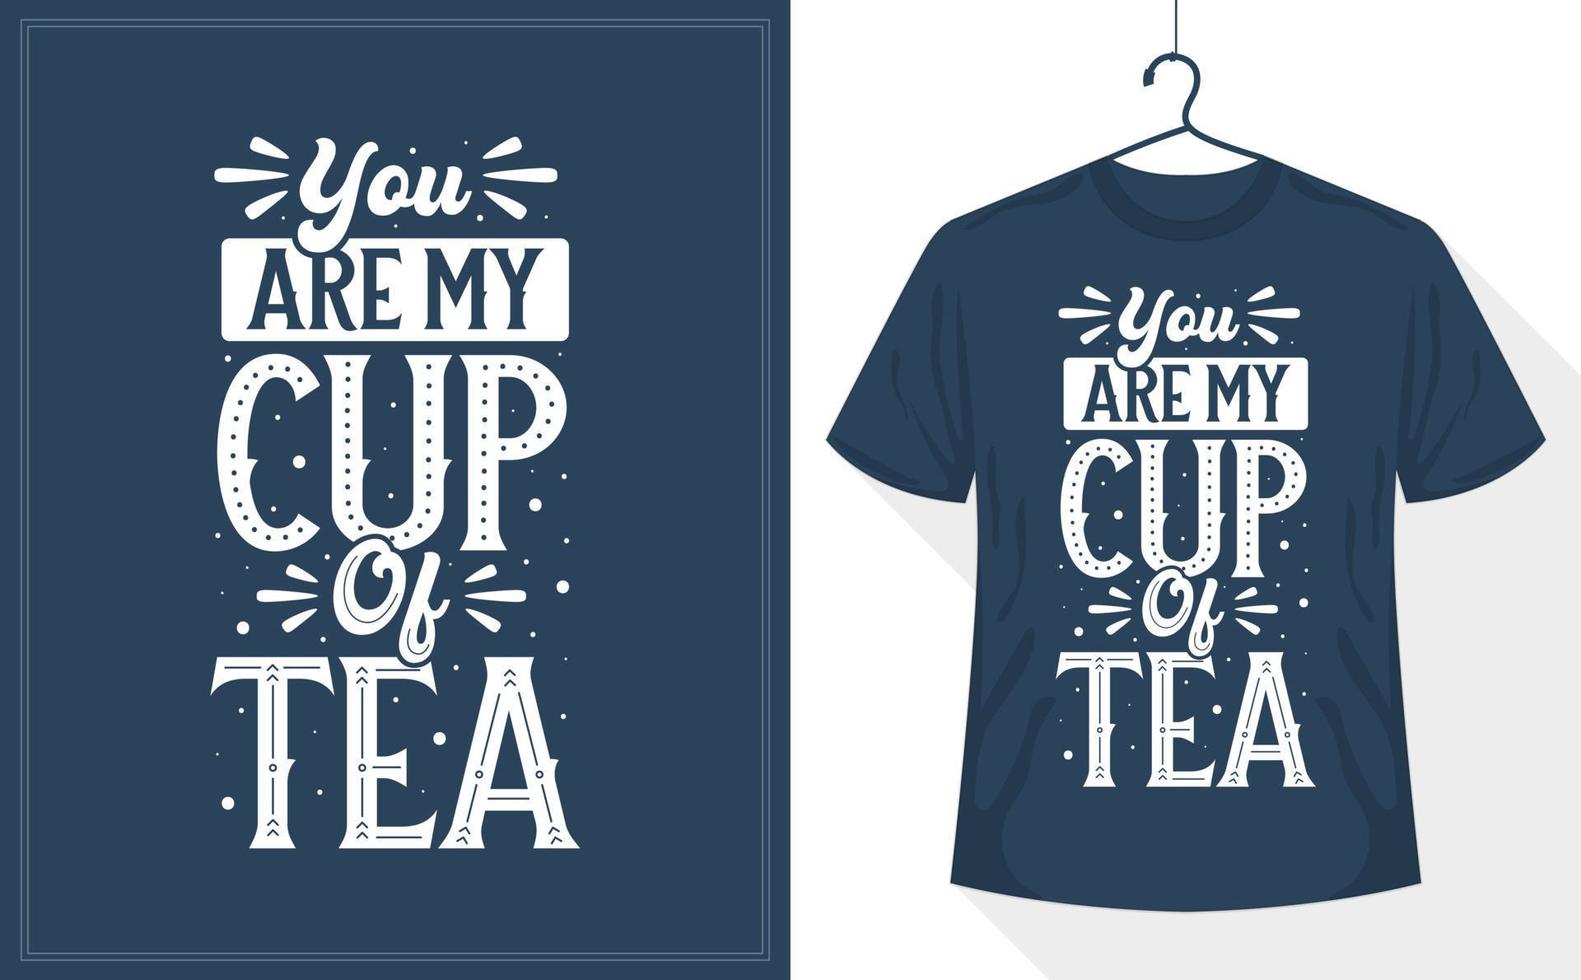 du är min kopp av te, te citat typografi design vektor